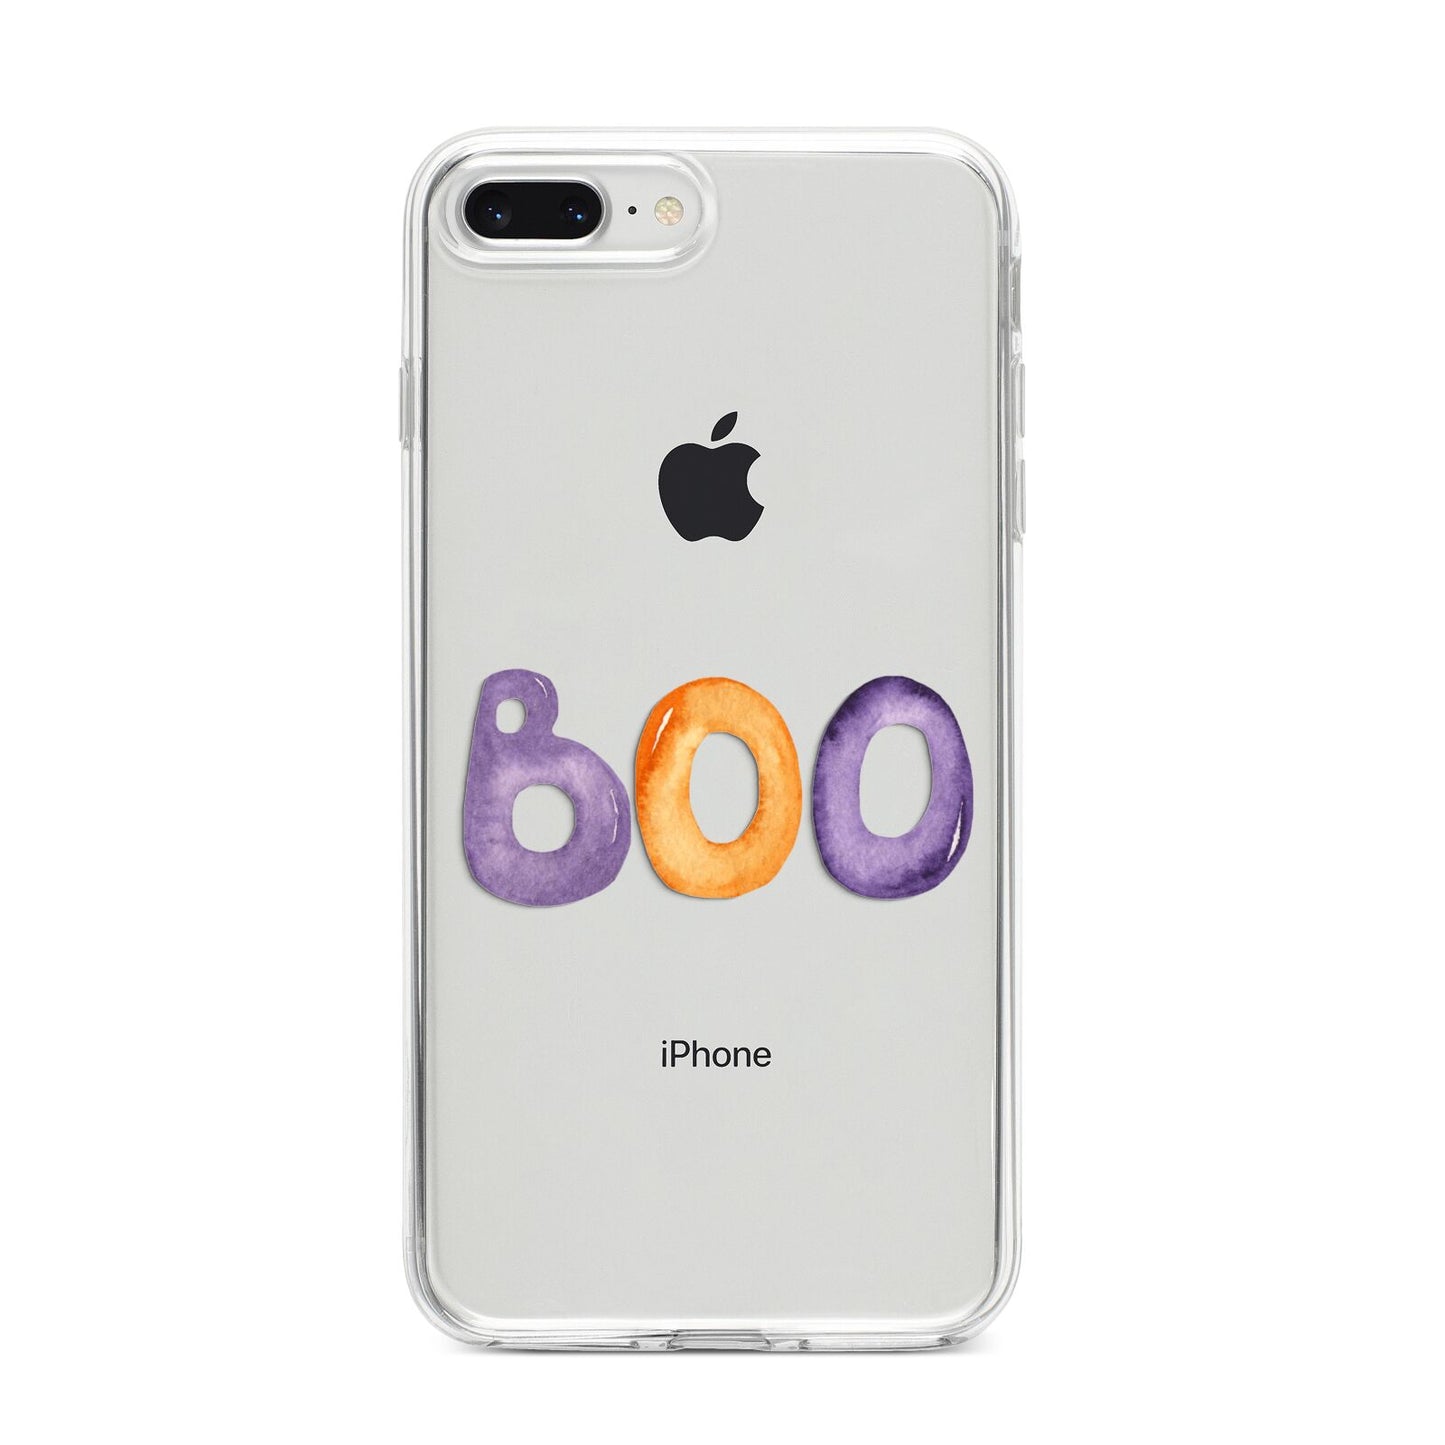 Boo iPhone 8 Plus Bumper Case on Silver iPhone